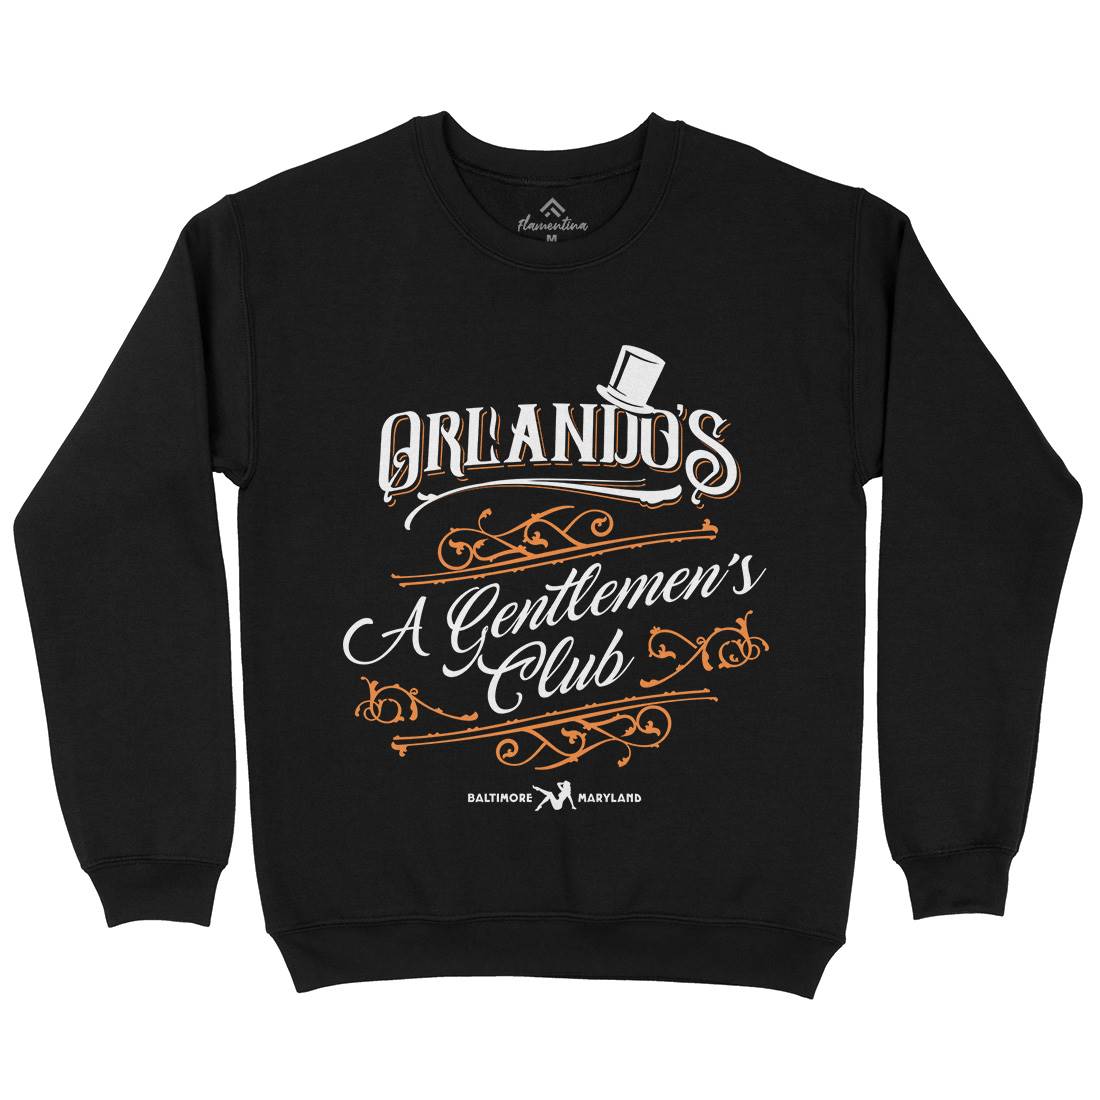 Orlandos Club Kids Crew Neck Sweatshirt Drinks D173